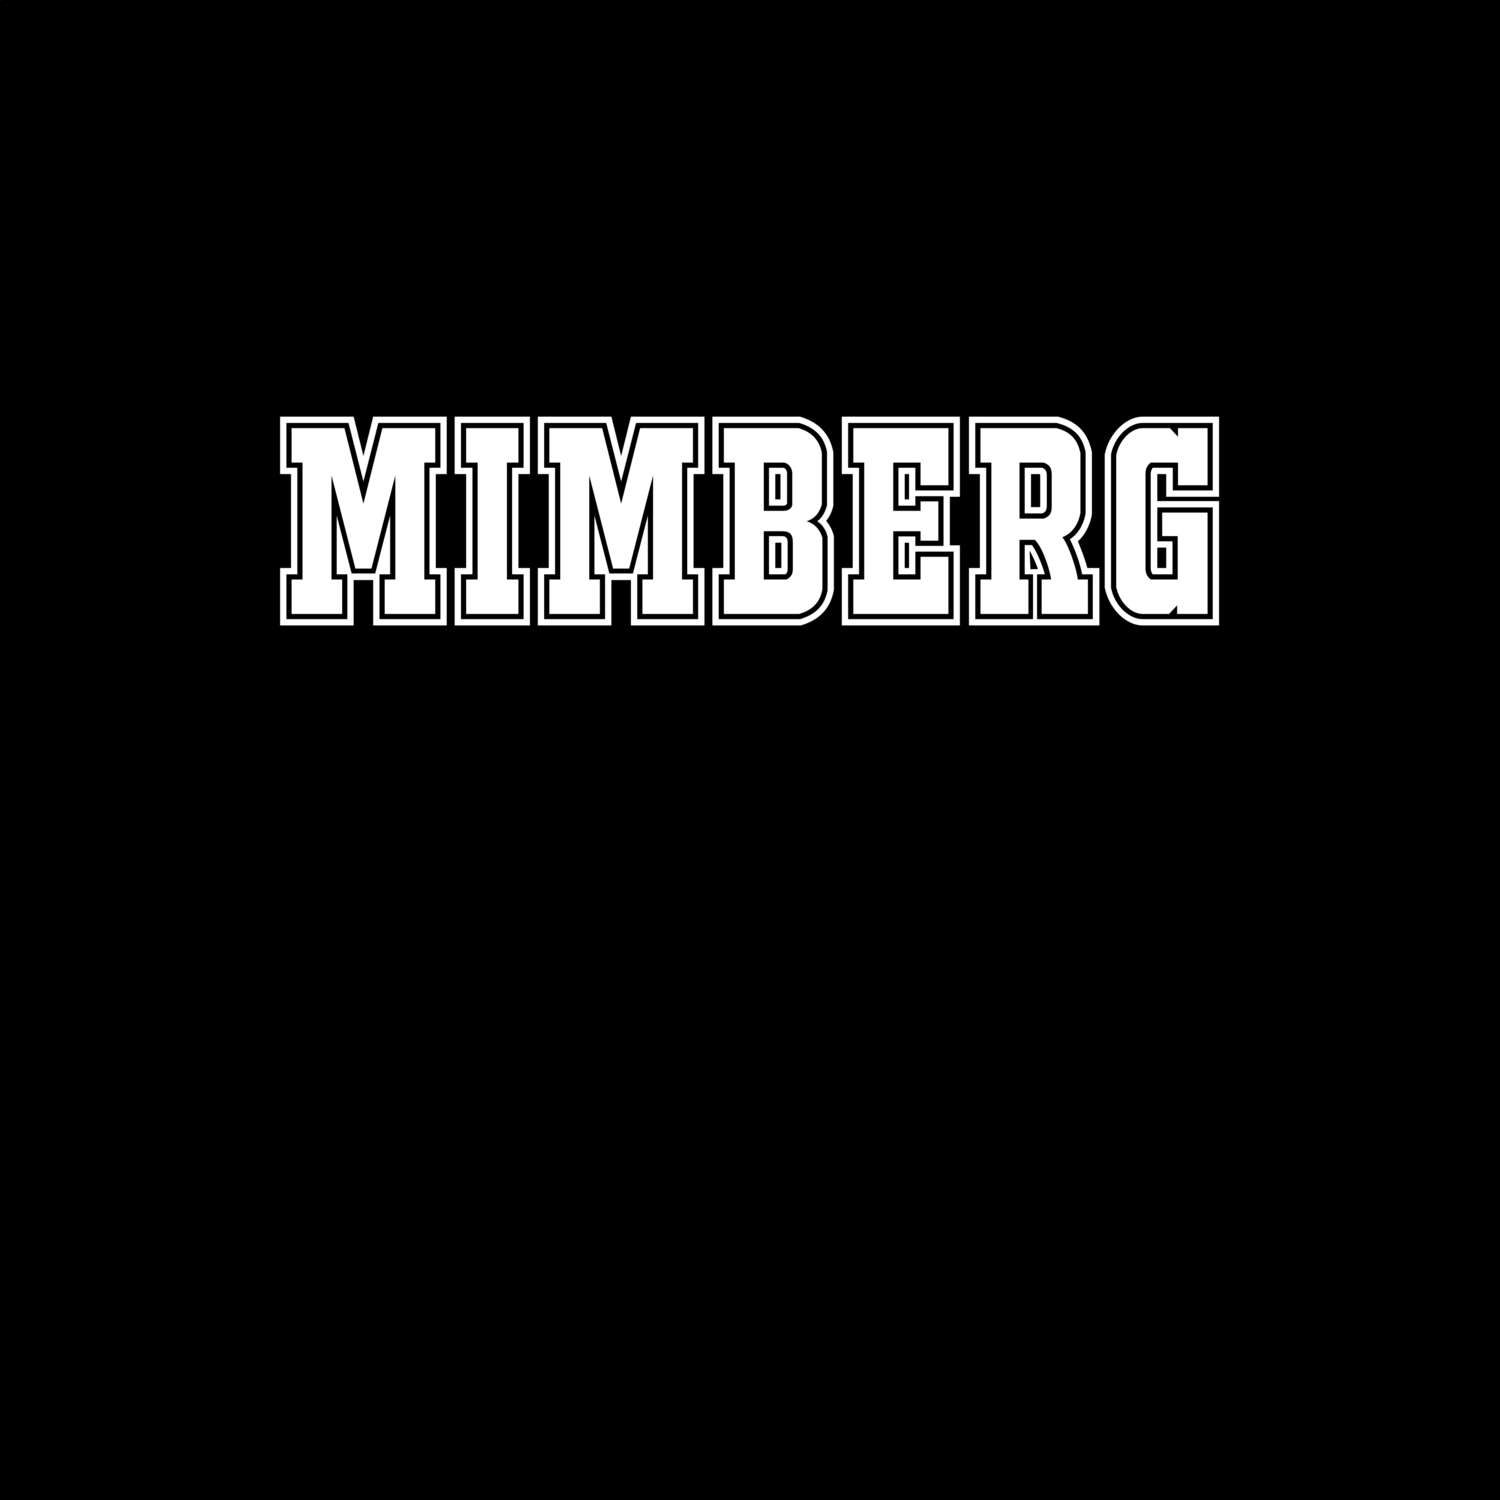 Mimberg T-Shirt »Classic«